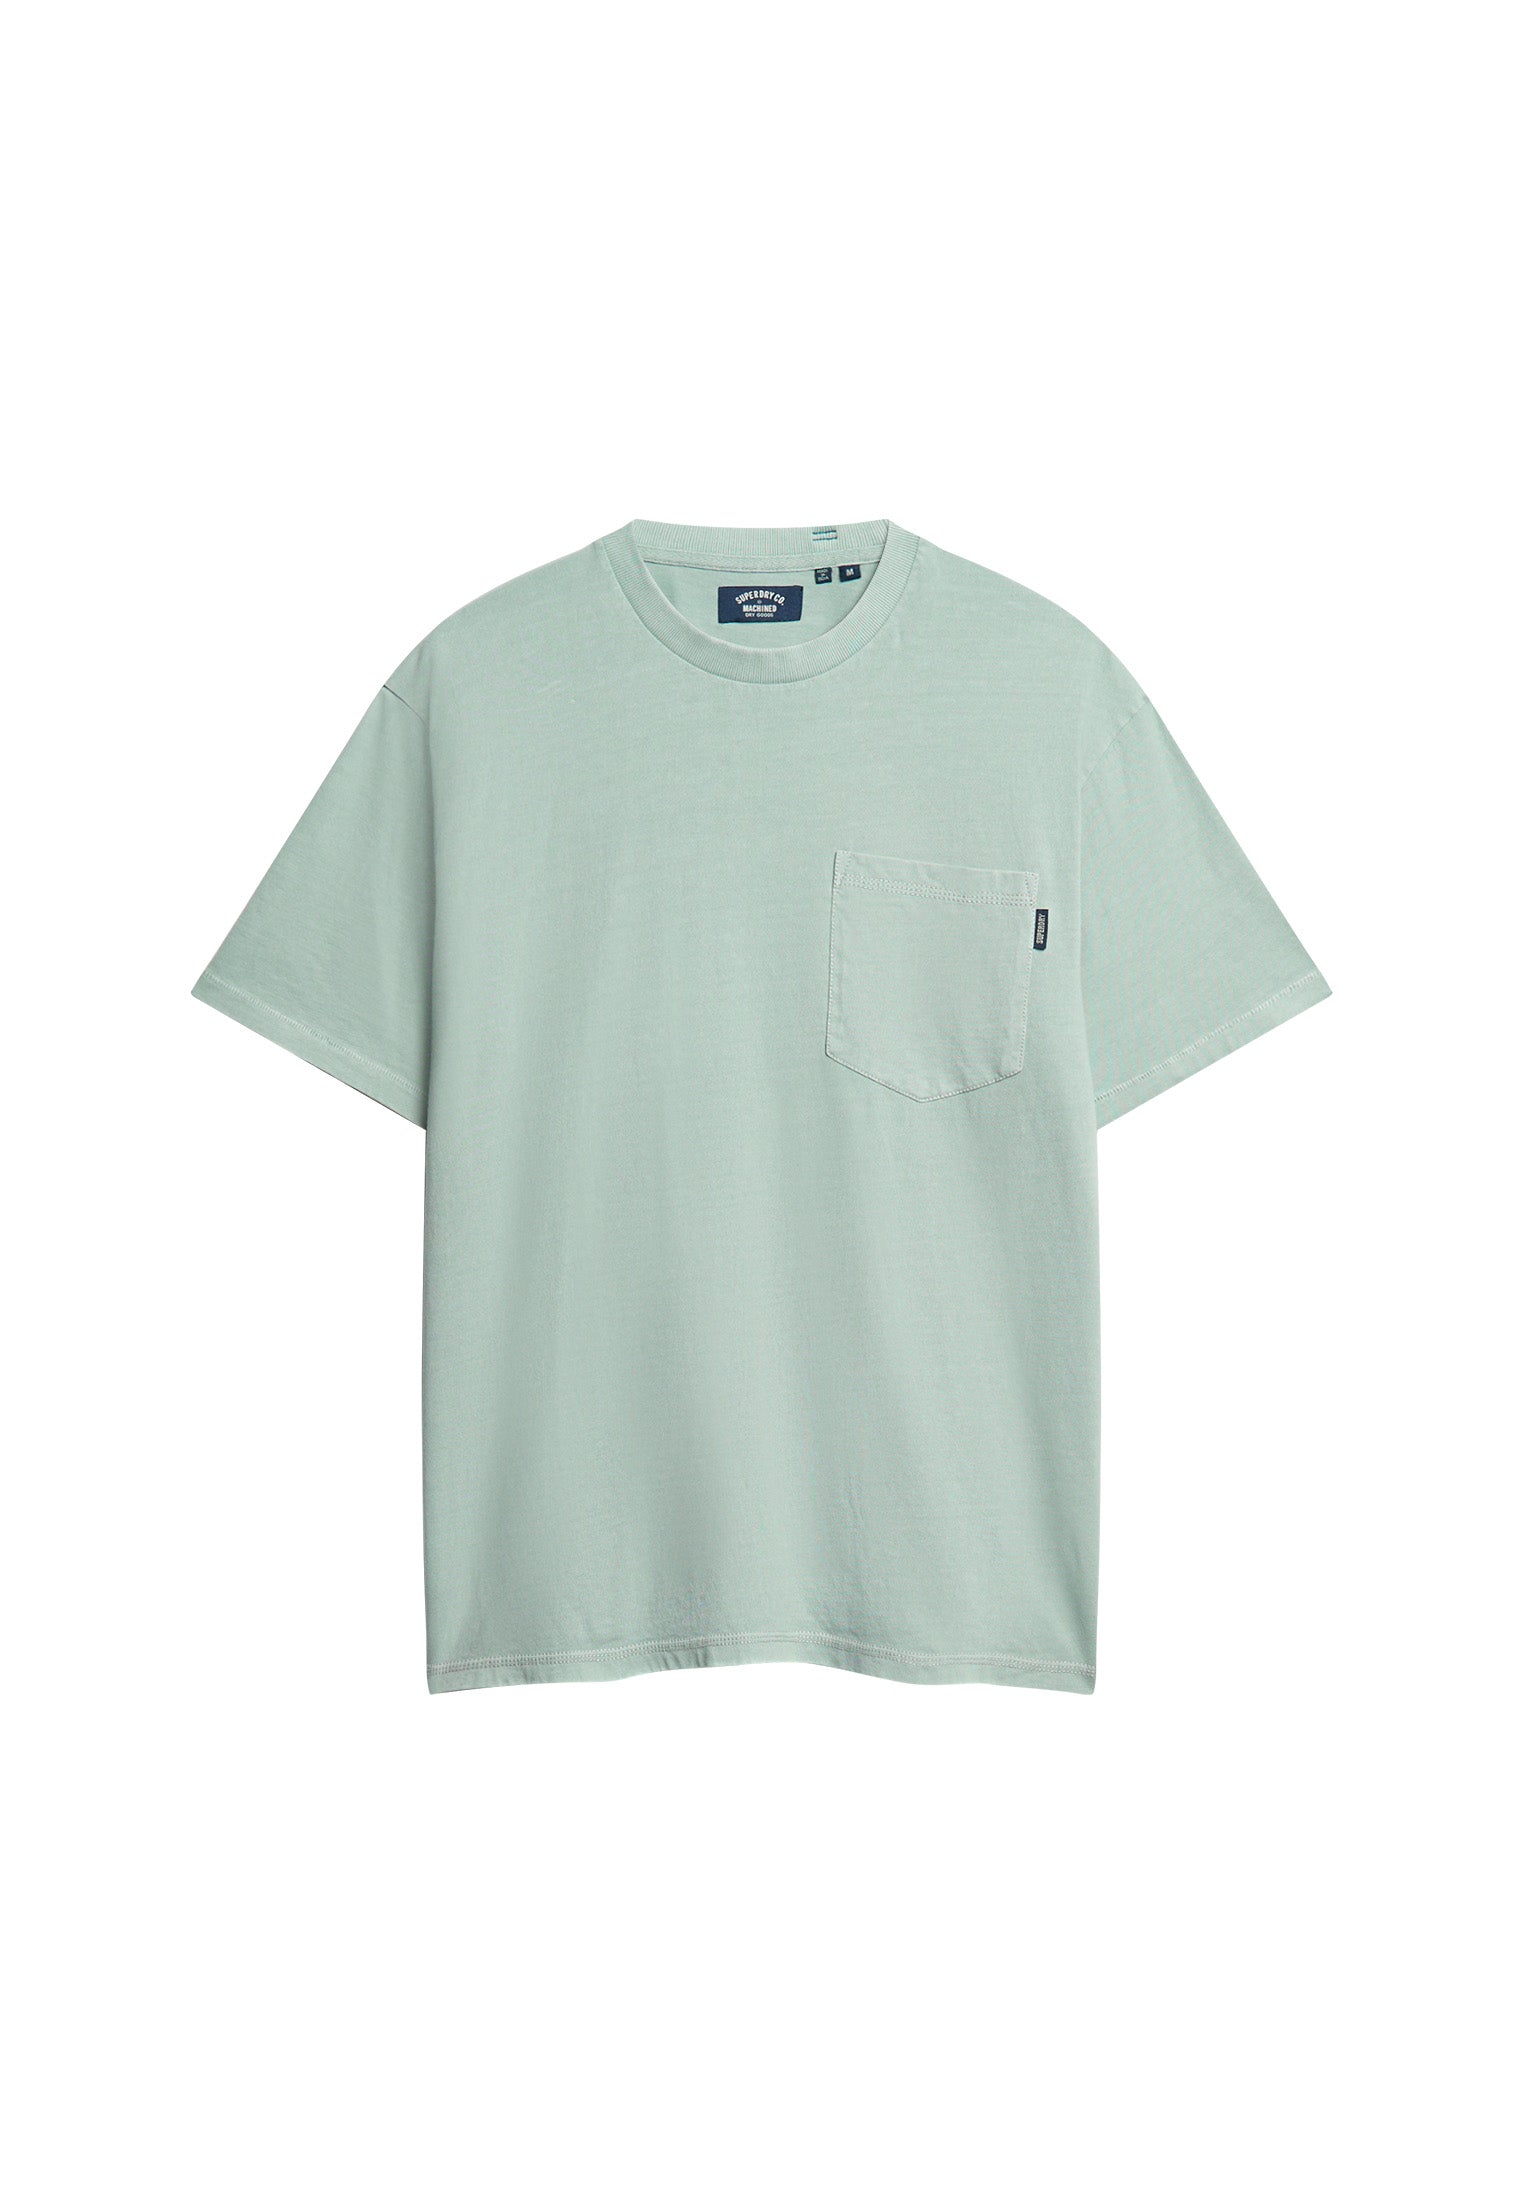 Contrast Stitch Pocket Skylark Grey T-shirt